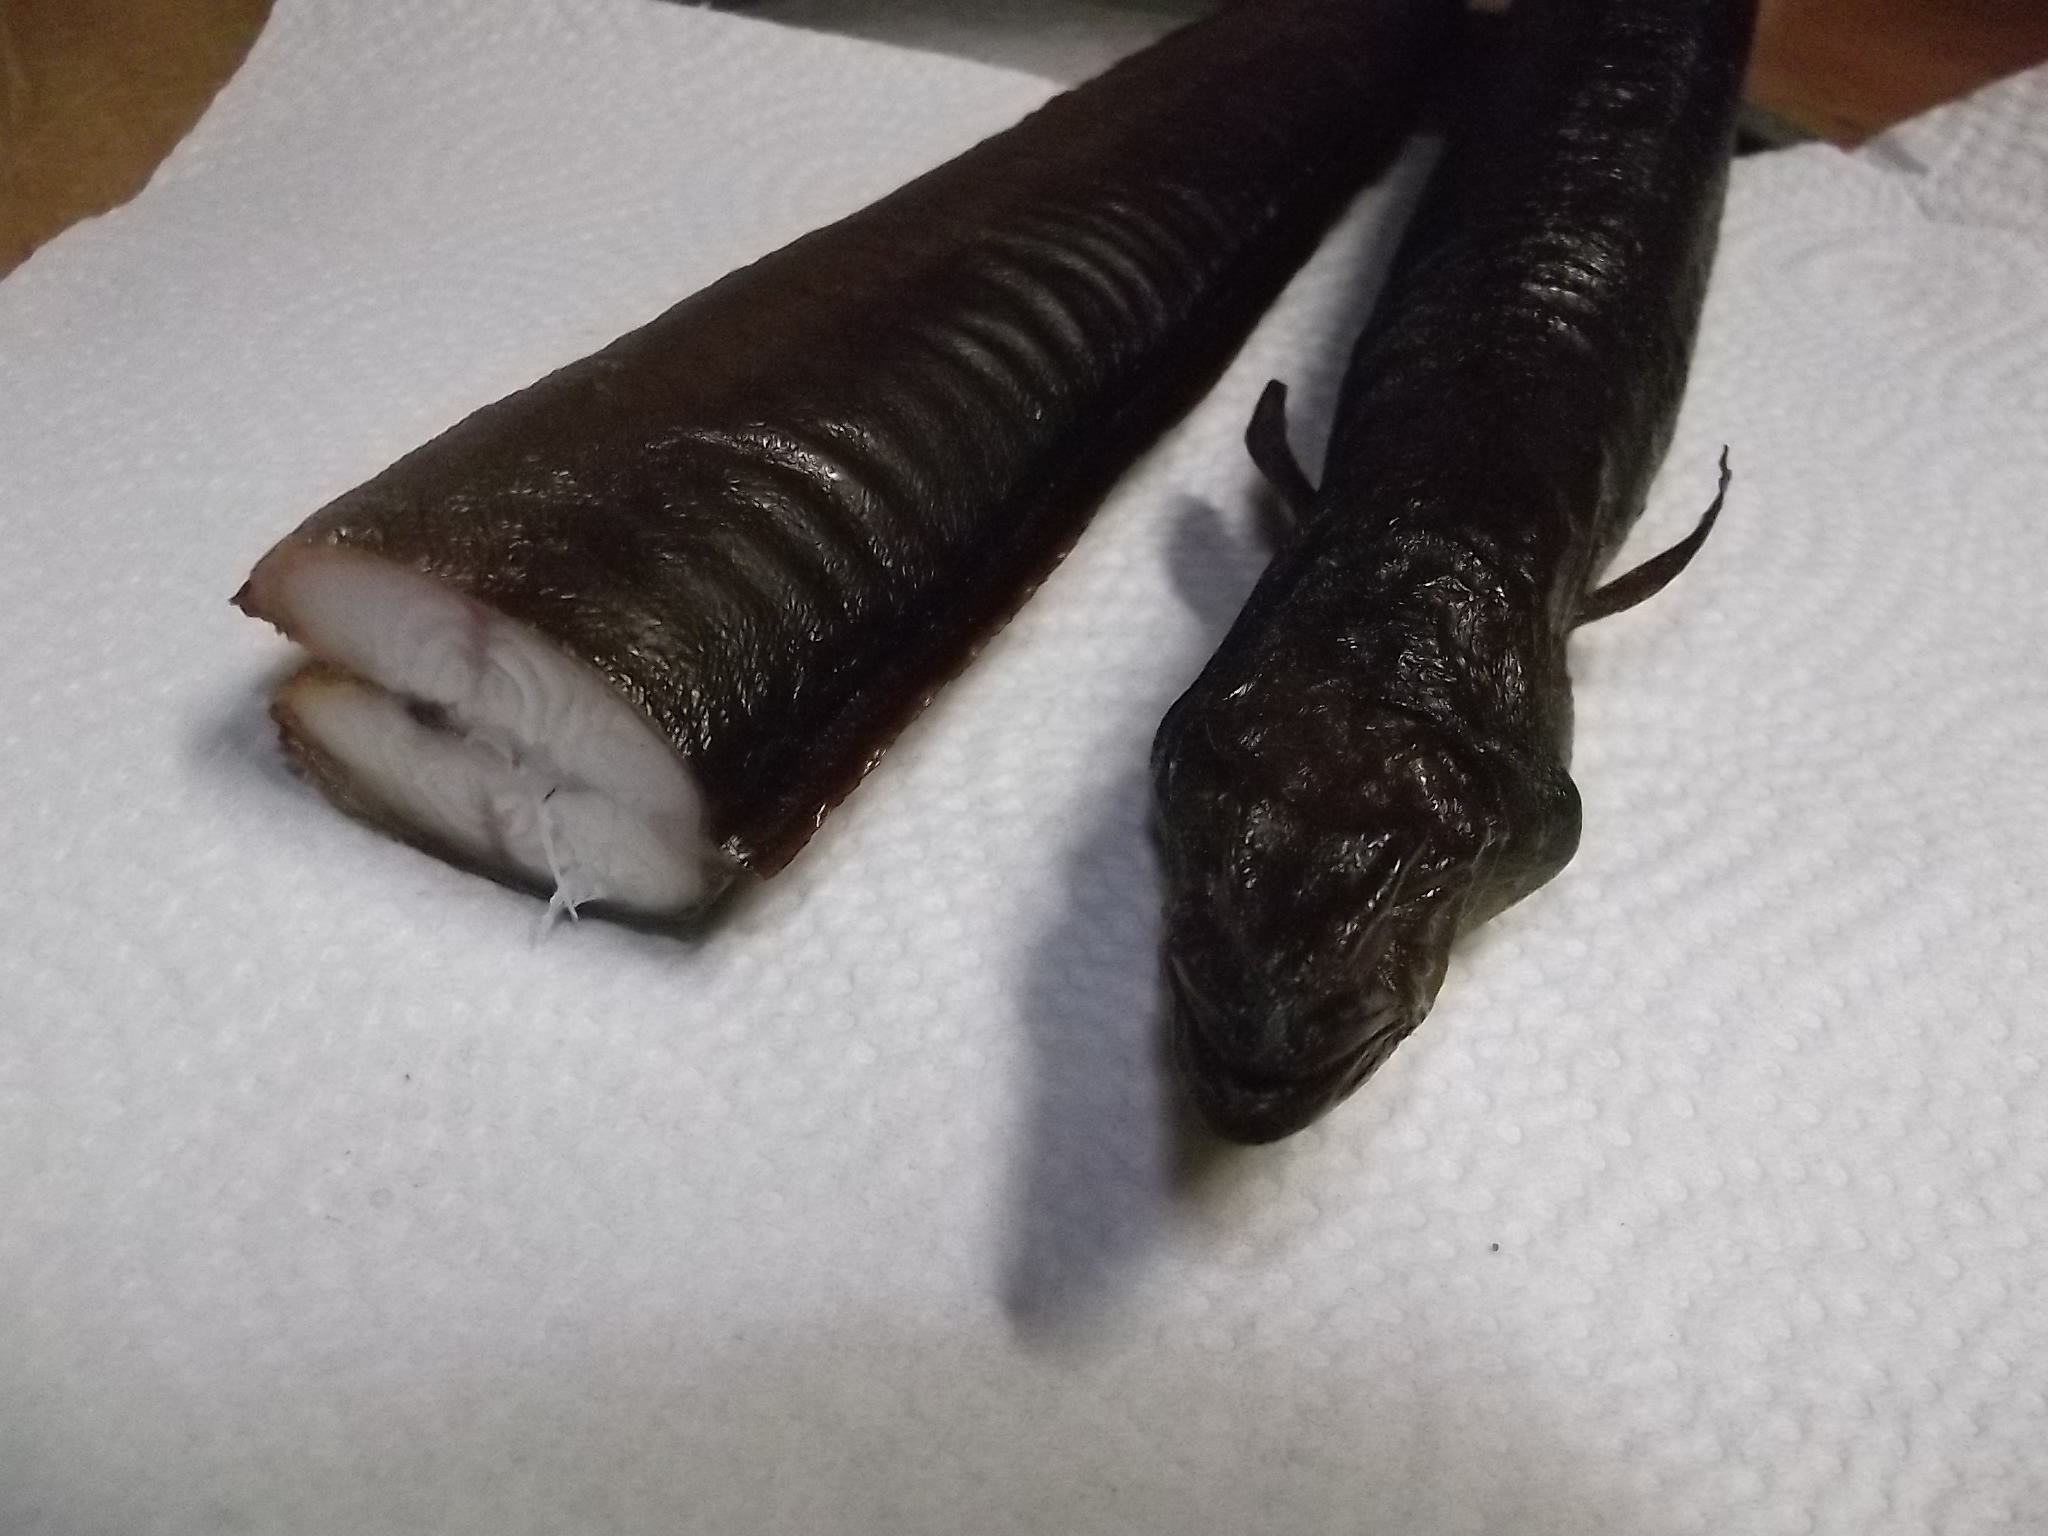 356 g geräucherter Aal aus Steinhude - kg ca. 40 €